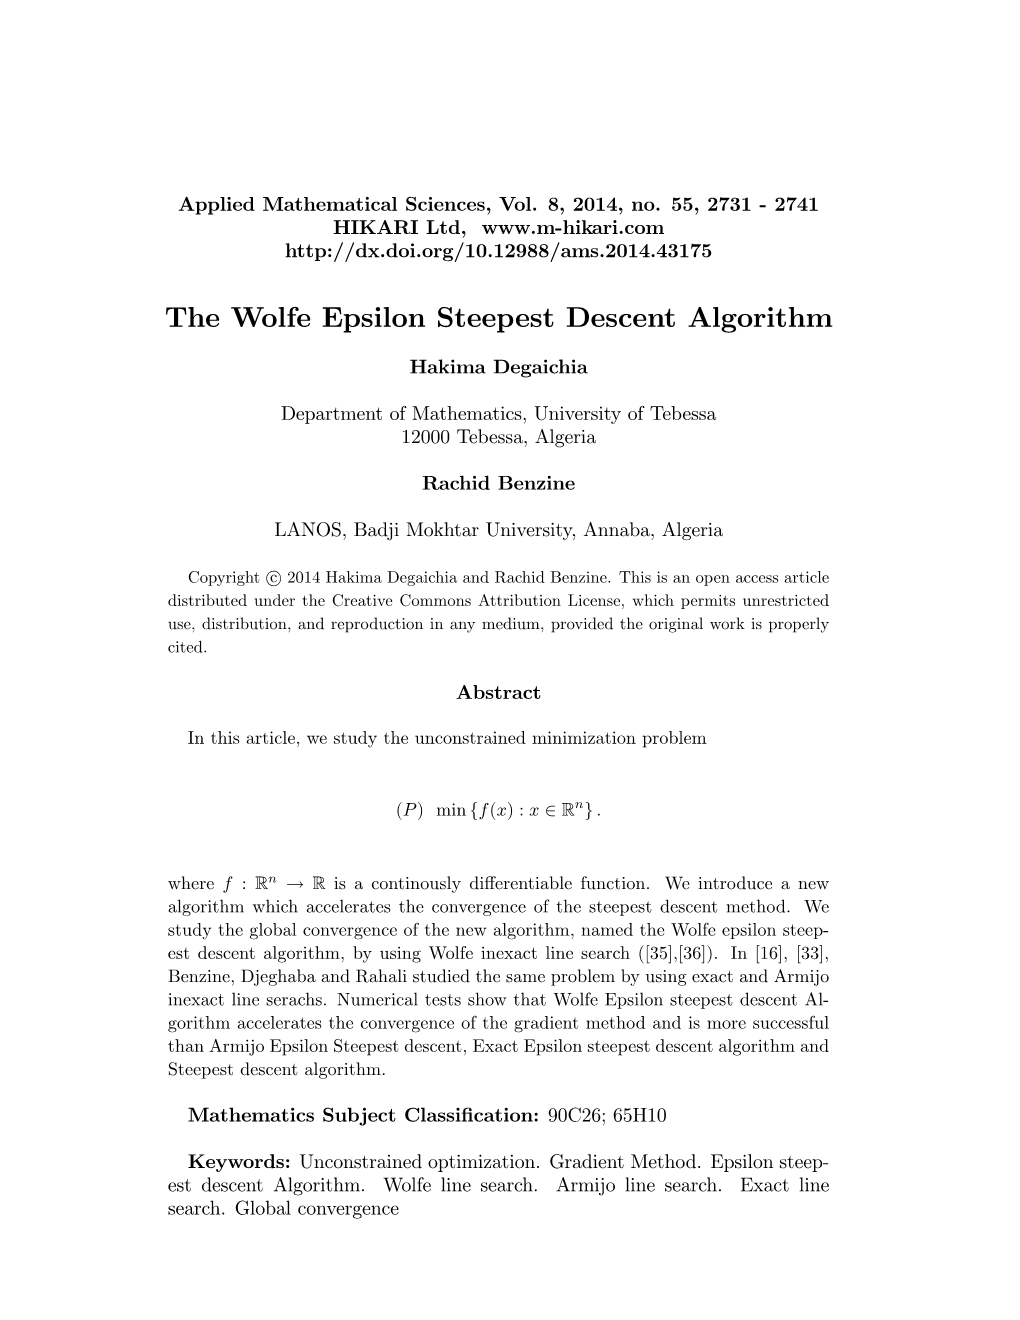 The Wolfe Epsilon Steepest Descent Algorithm